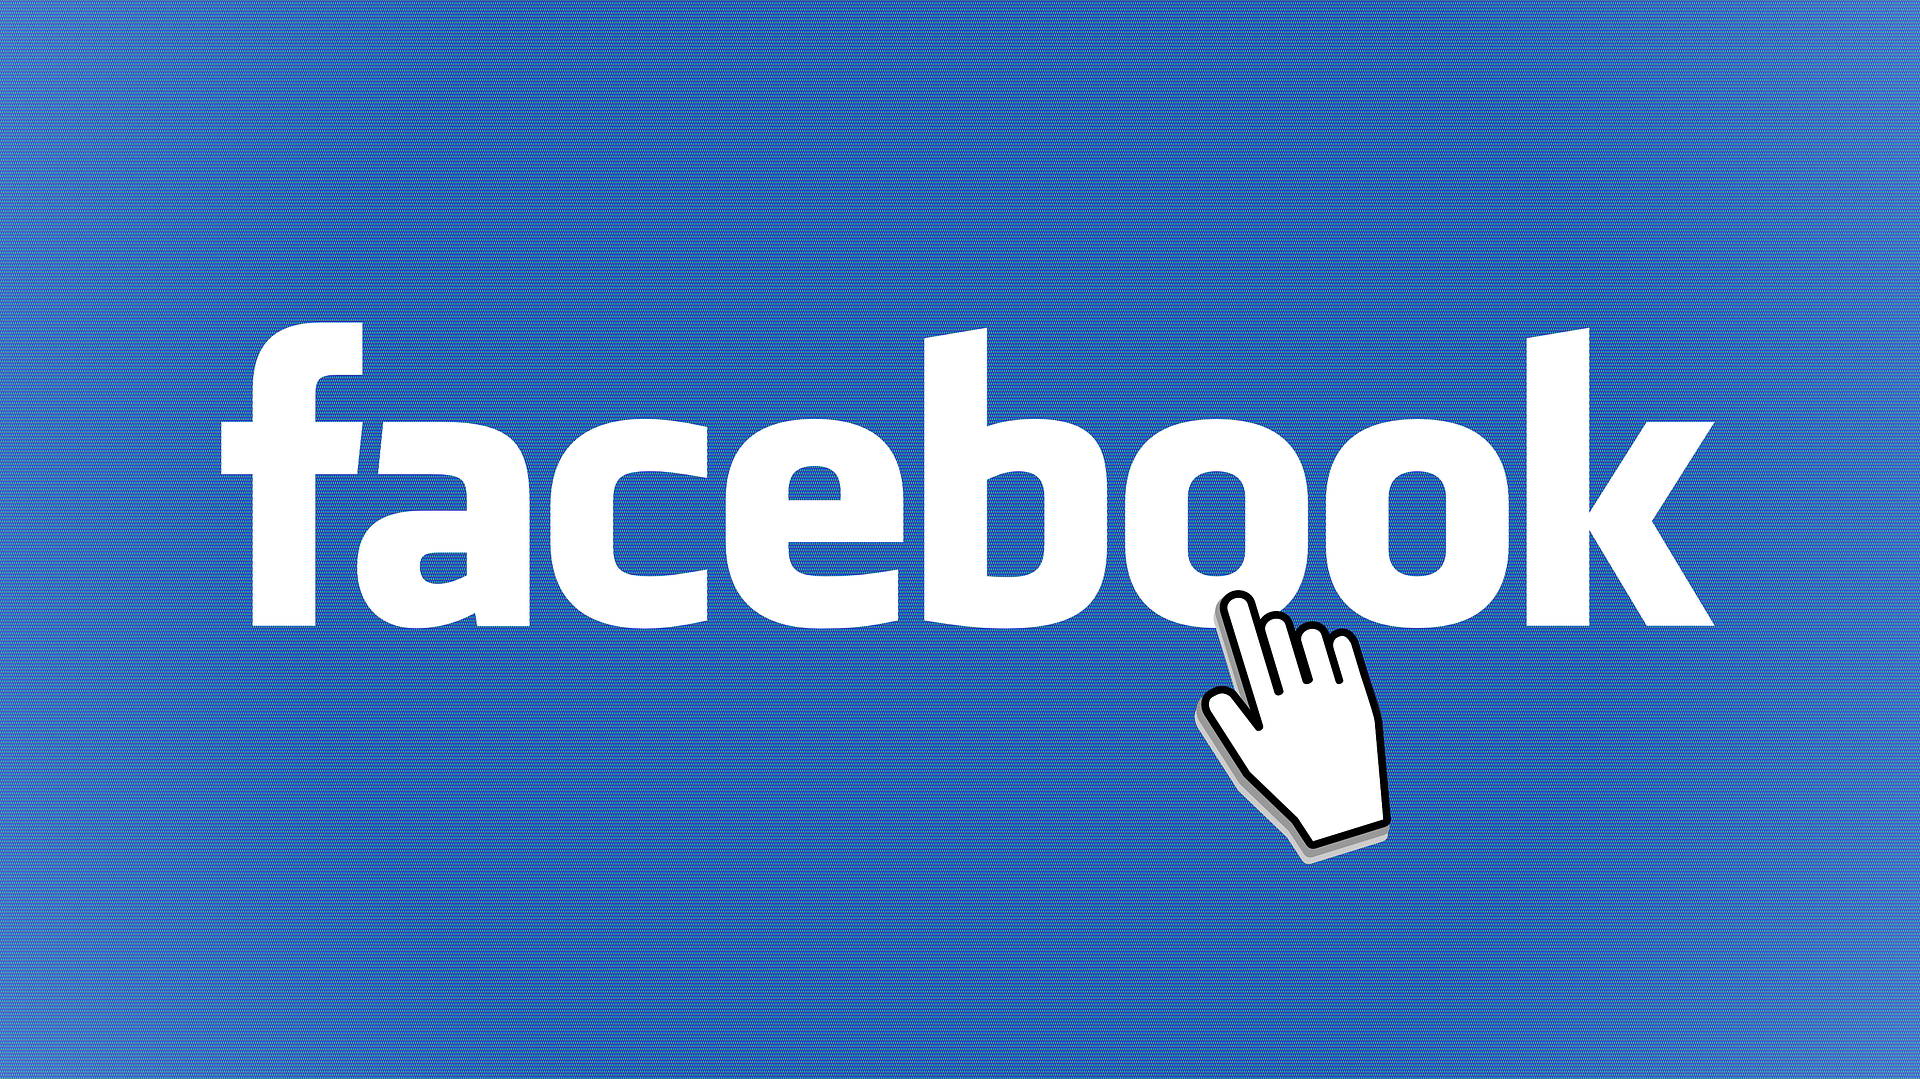 Facebook logo with hand cursor | AutoRevo